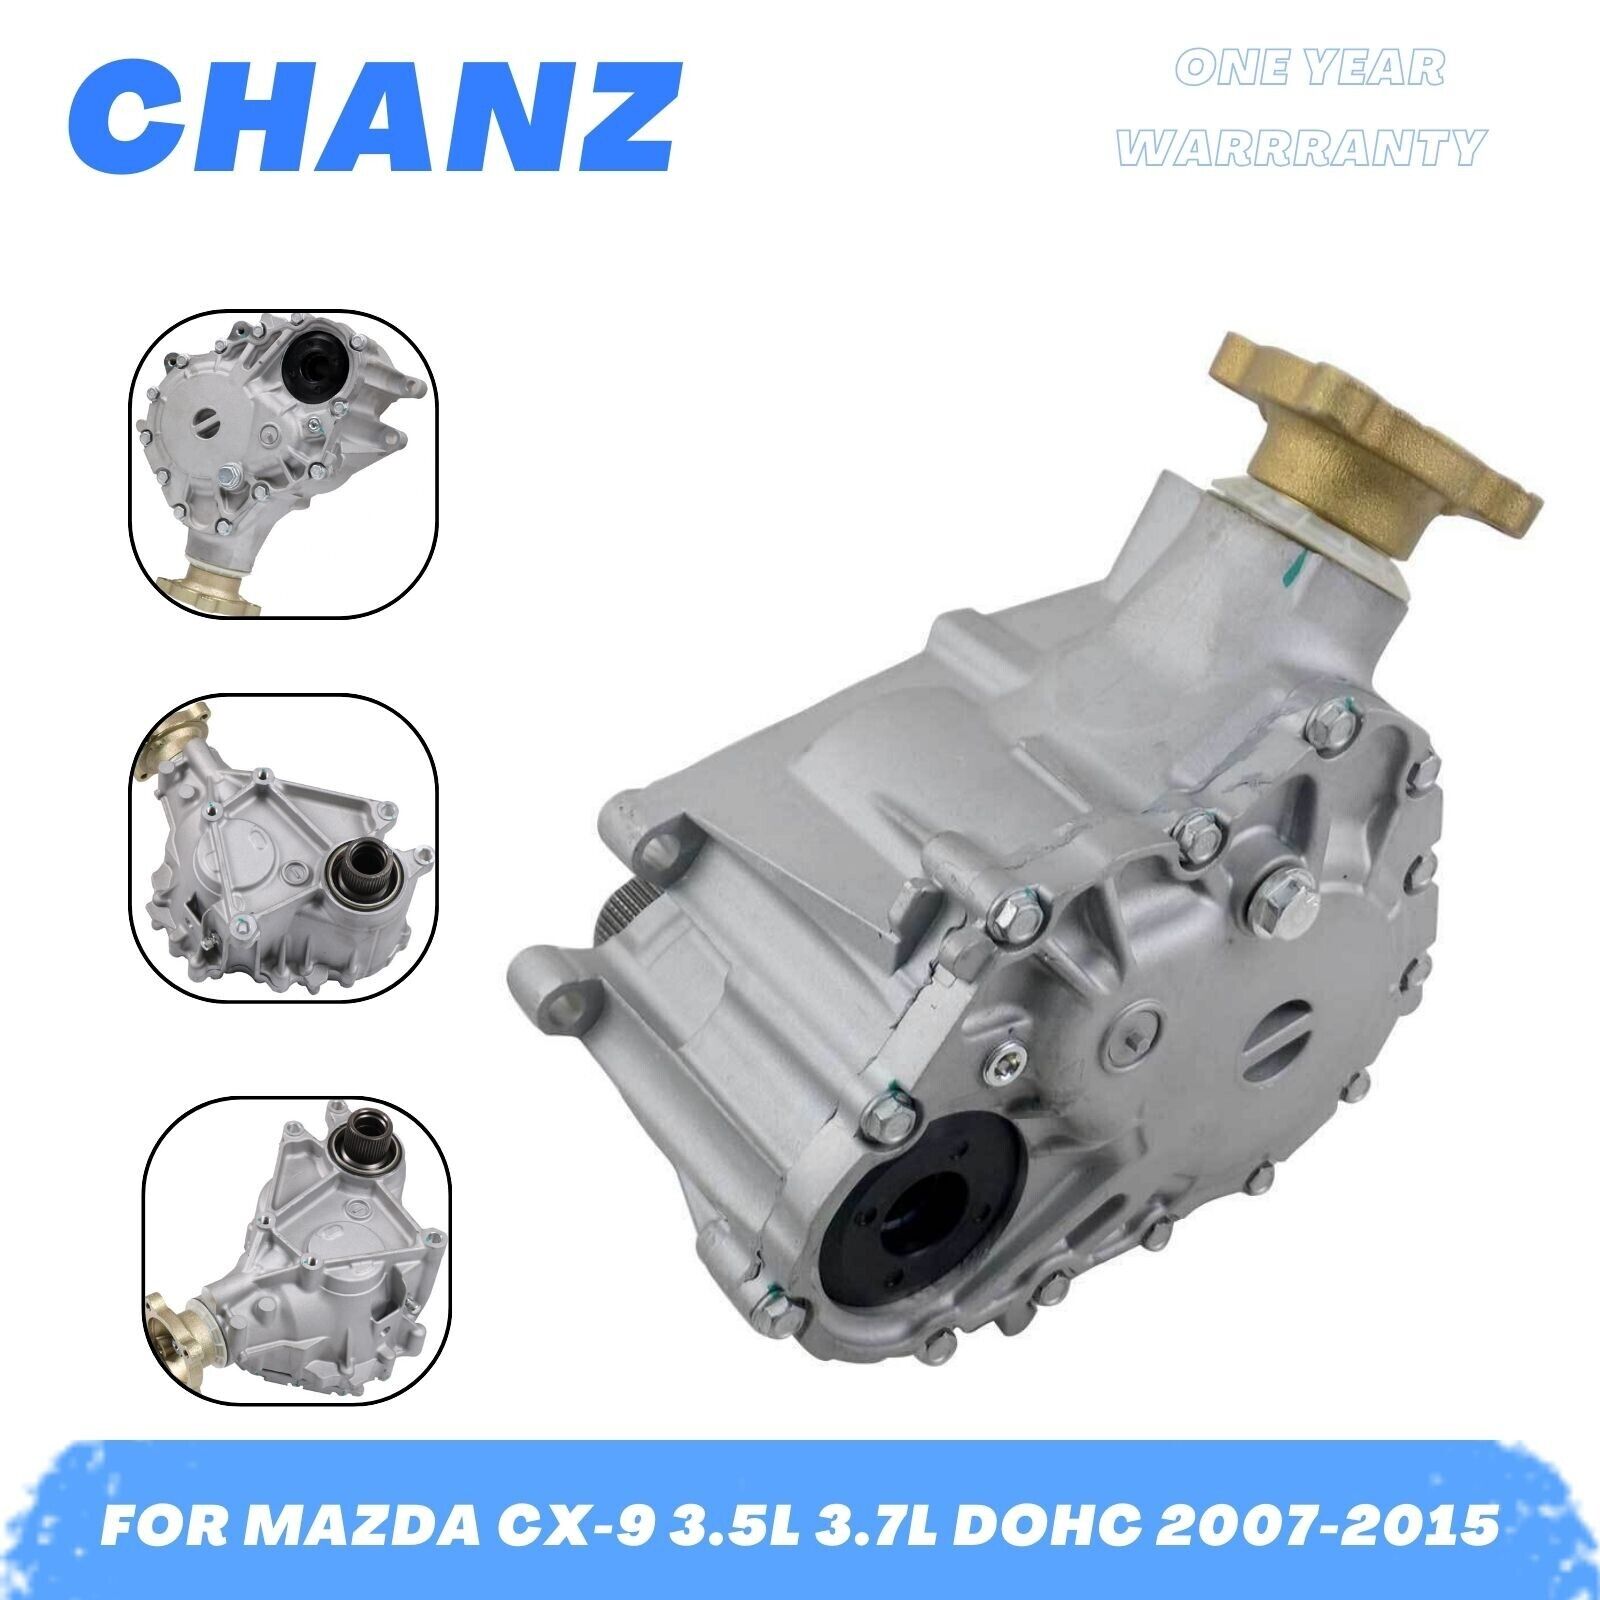 Transfer Case Assembly Fit For Mazda CX-9 07-15 3.5L 3.7L AW2127500 AWD V6 DOHC